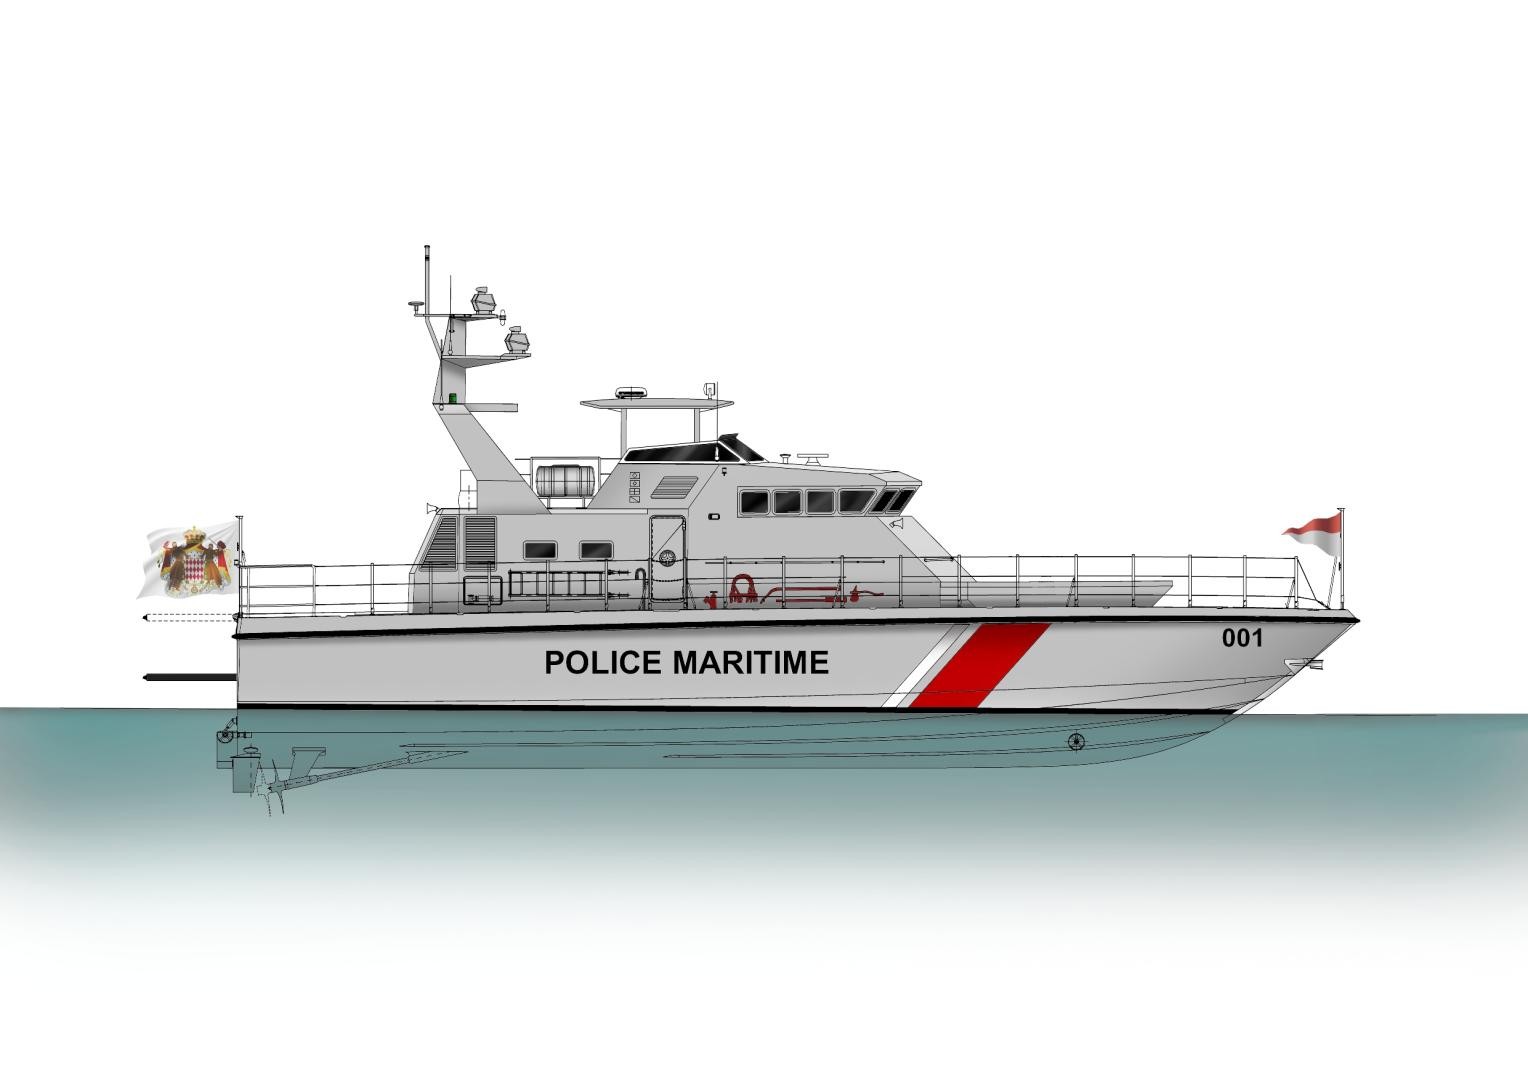 Police Maritime